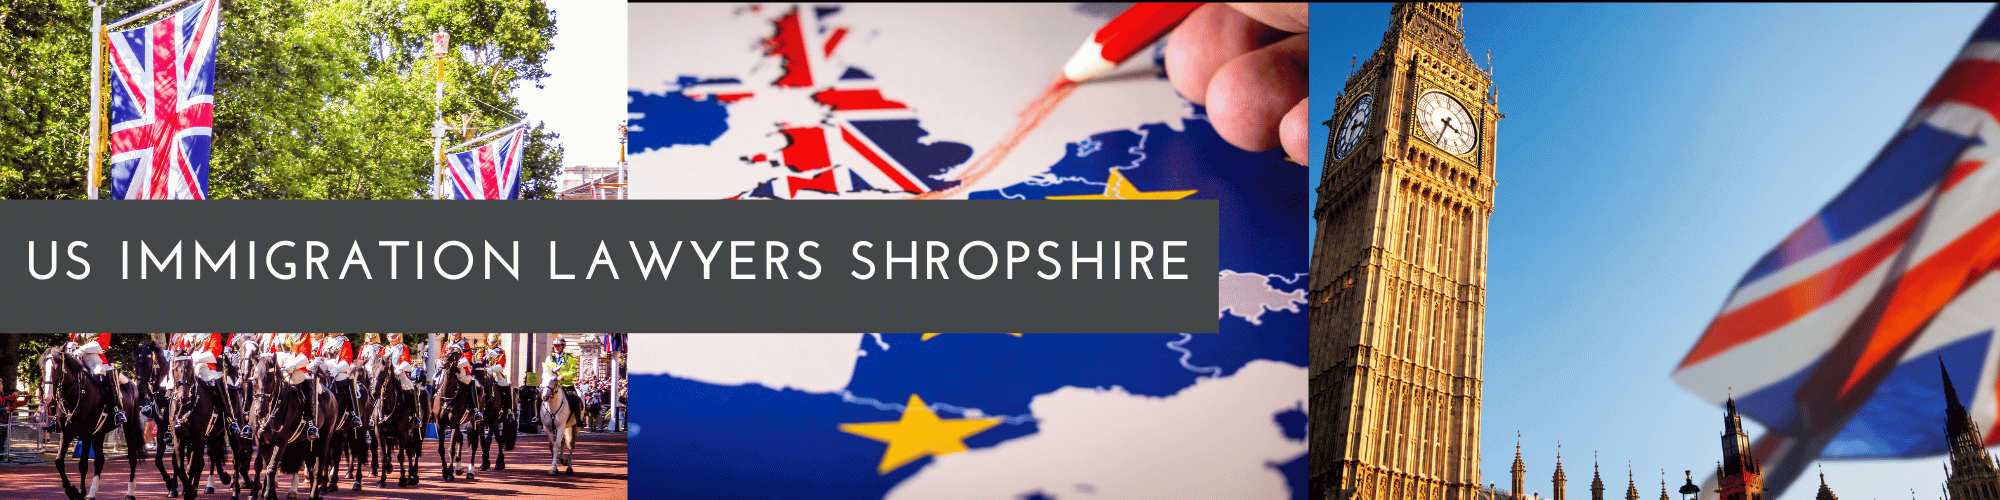 US Immigration Lawyers Shropshire